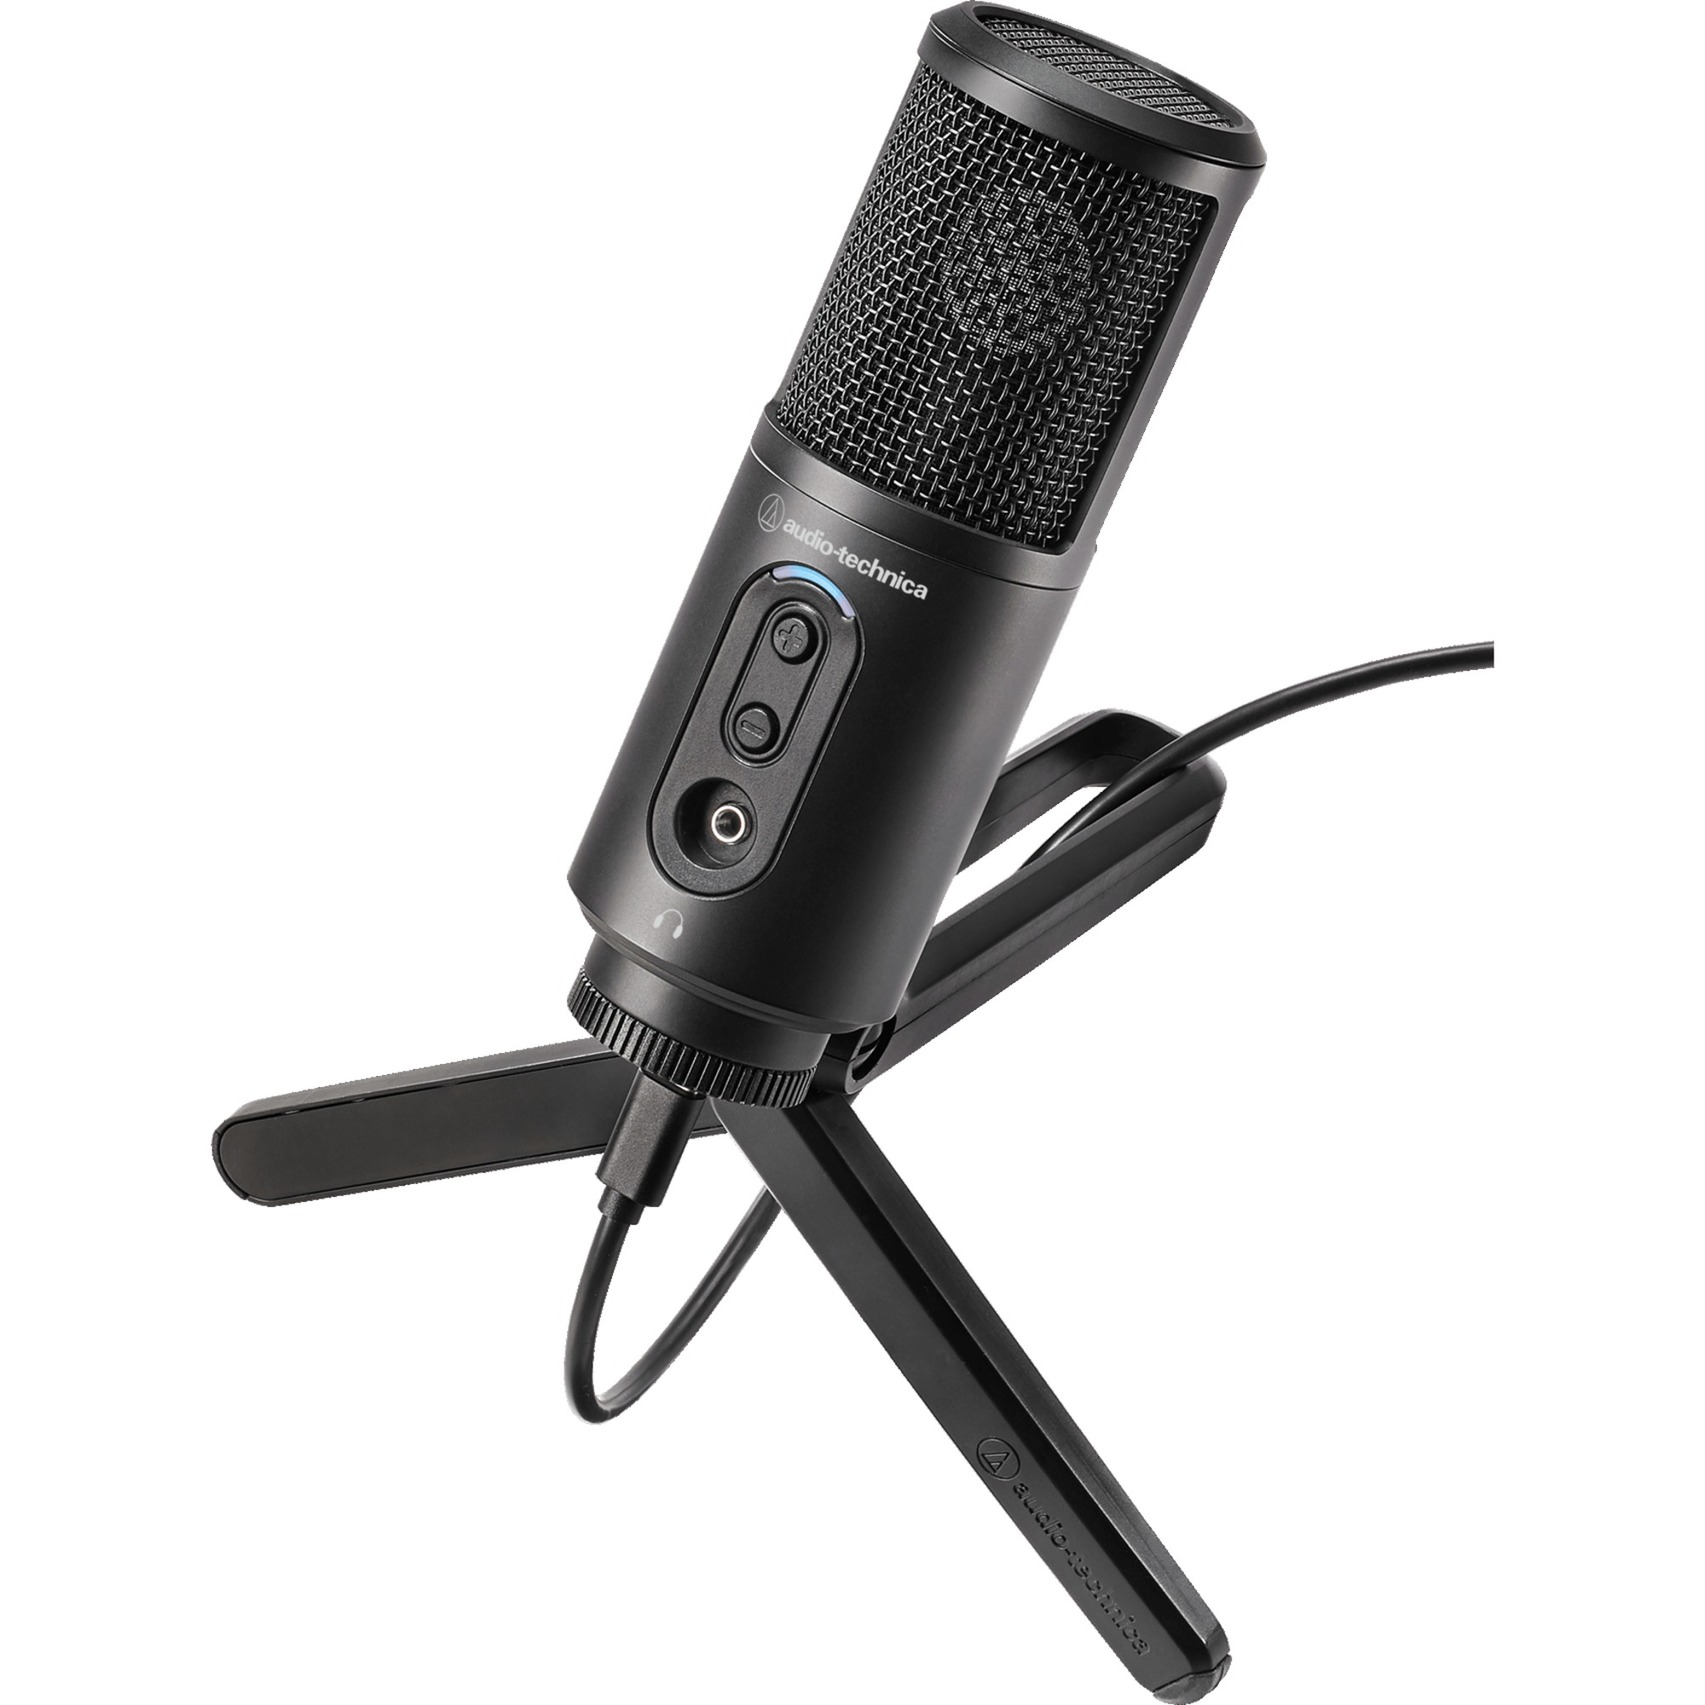 Image of Alternate - ATR2500x-USB, Mikrofon online einkaufen bei Alternate